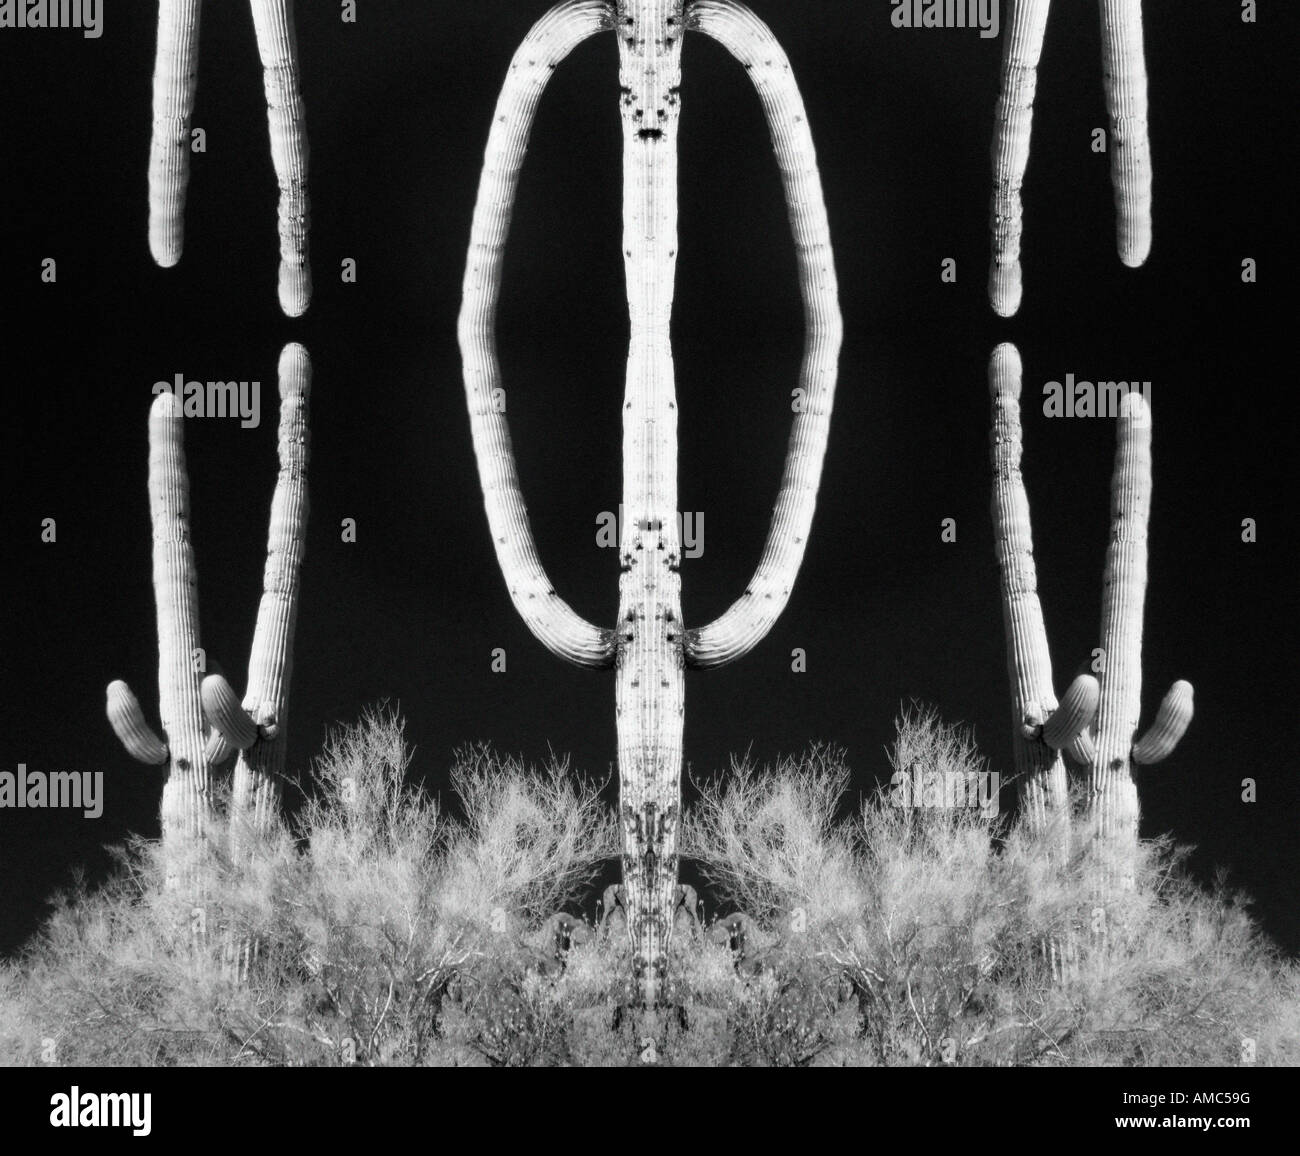 digitally-manipulated saguaro cactus in infrared Stock Photo